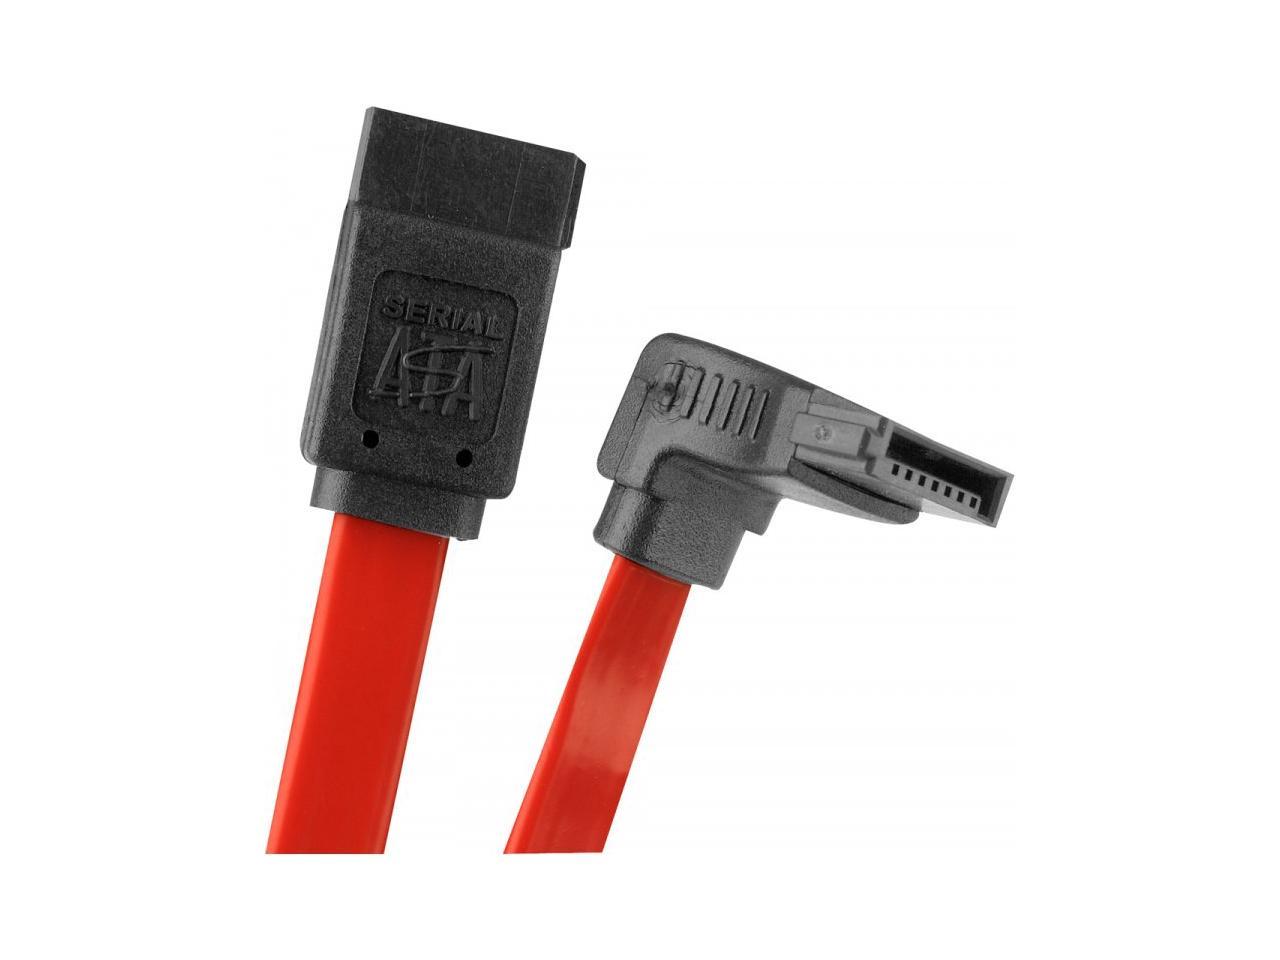 NEON SATA Cable Serial ATA 7-pin Internal Angled Cable Red 40cm. Model NQ-SC002-90DEG